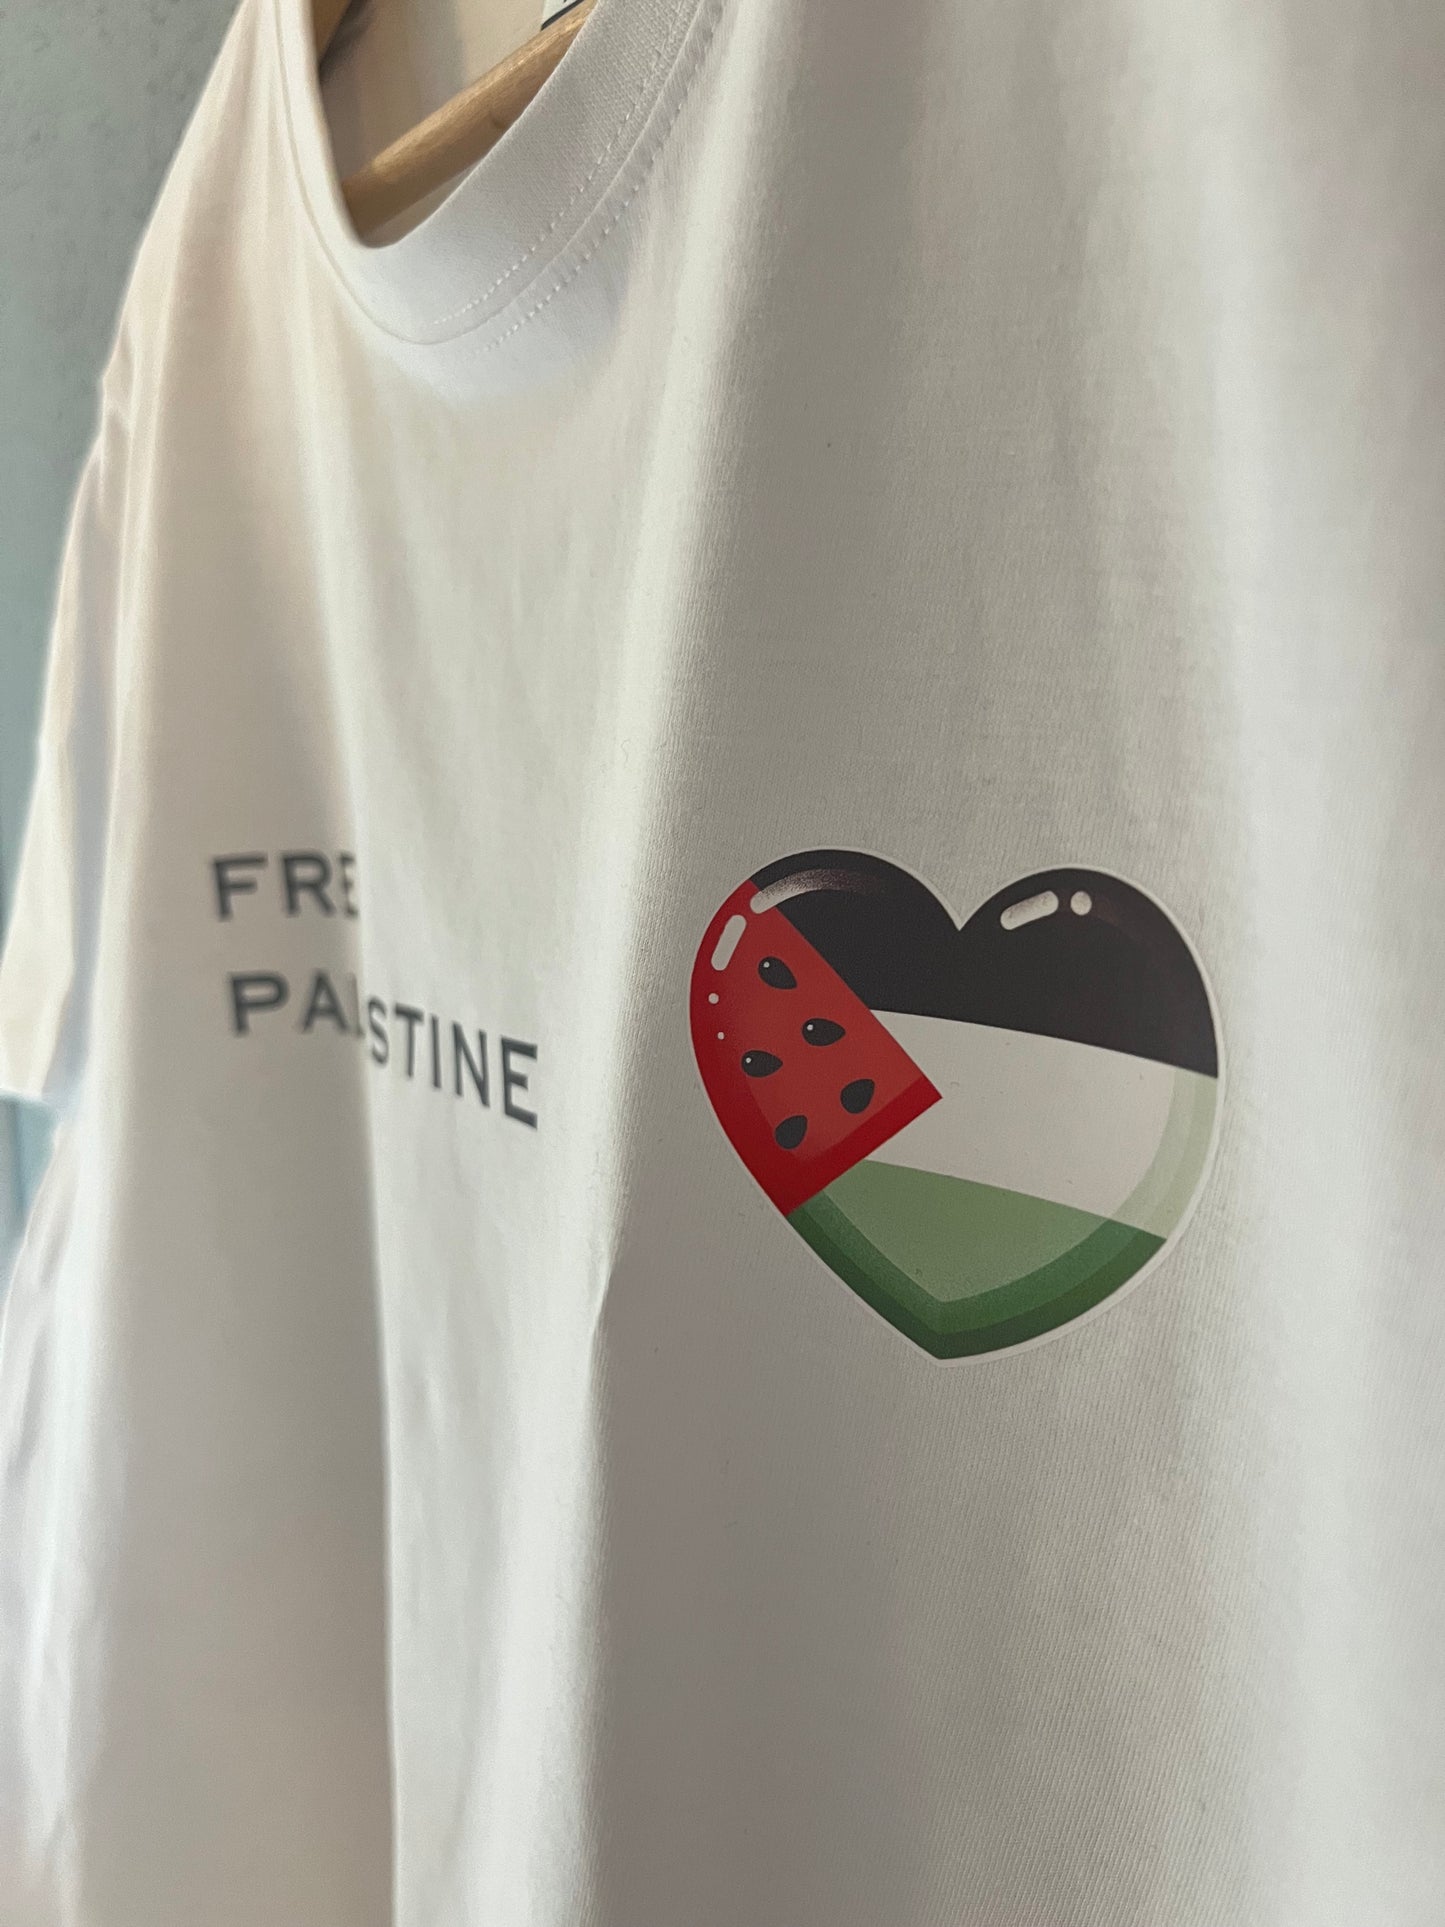 Free Palestine VI - sort og hvit!